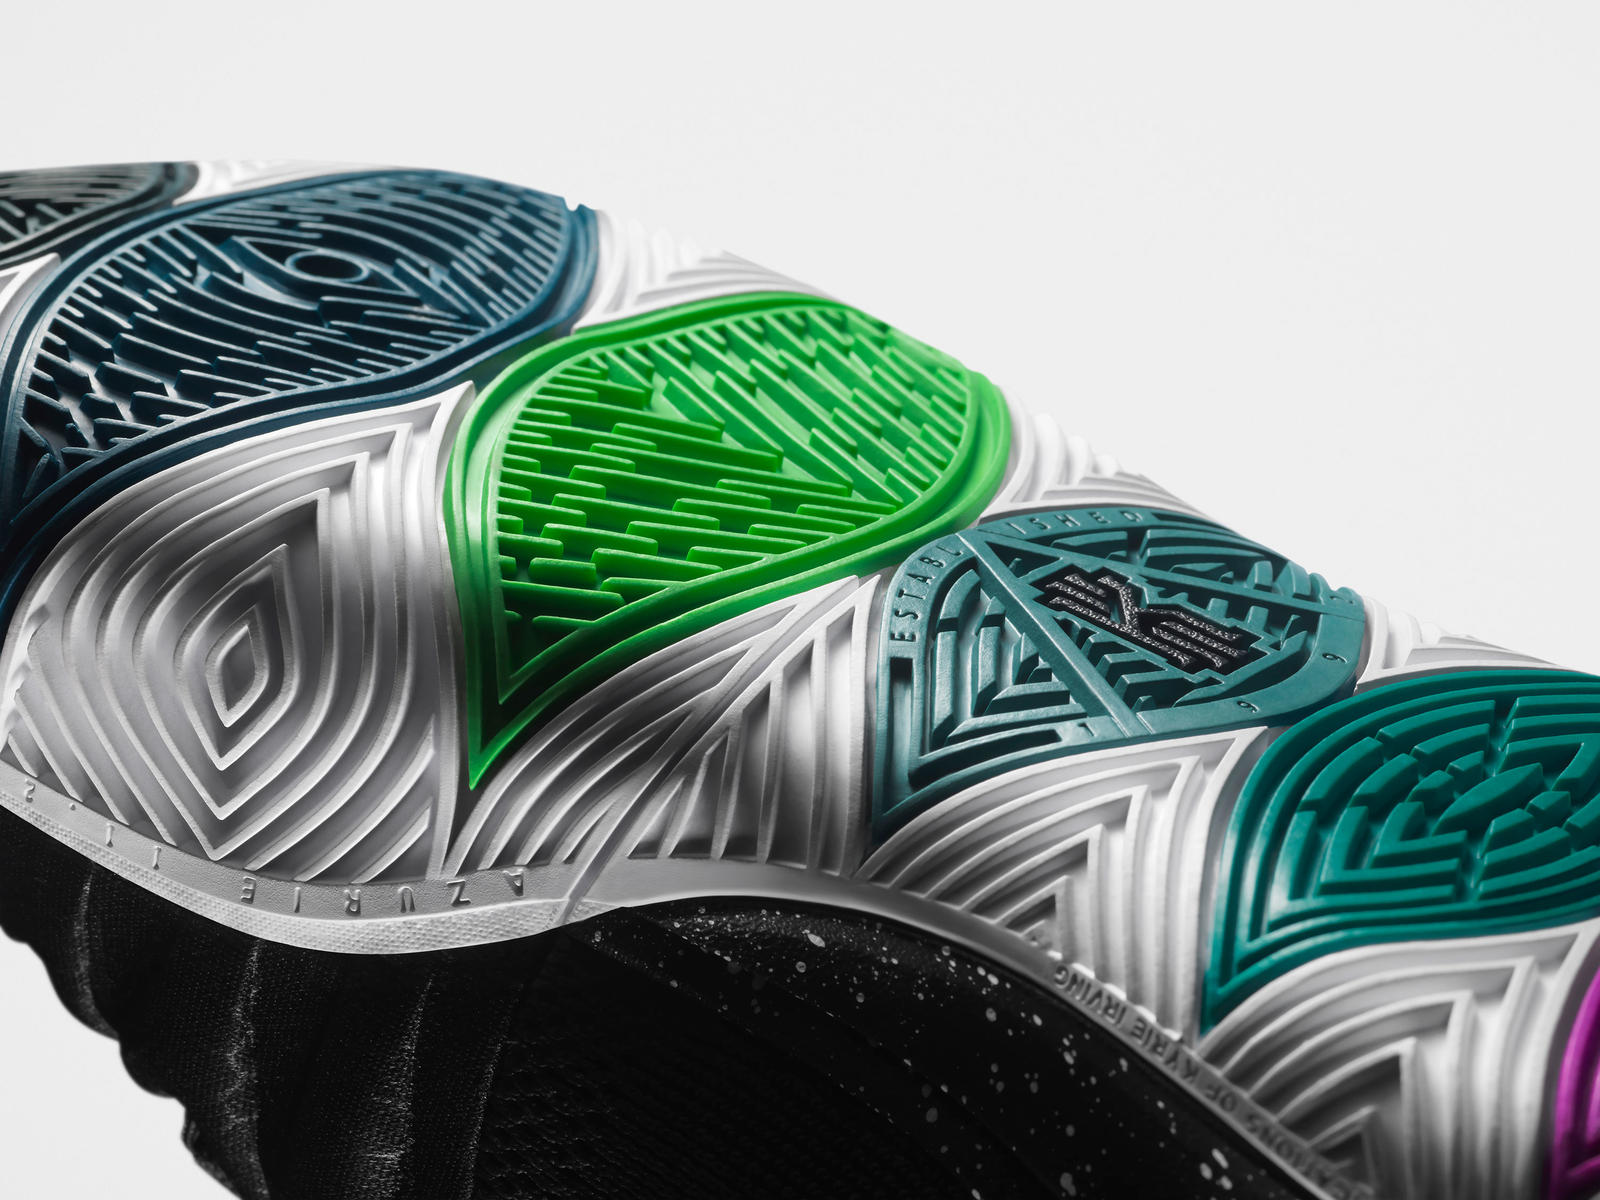 Jual Nike Kyrie 5 Murah Harga Terbaru 2020 Tokopedia